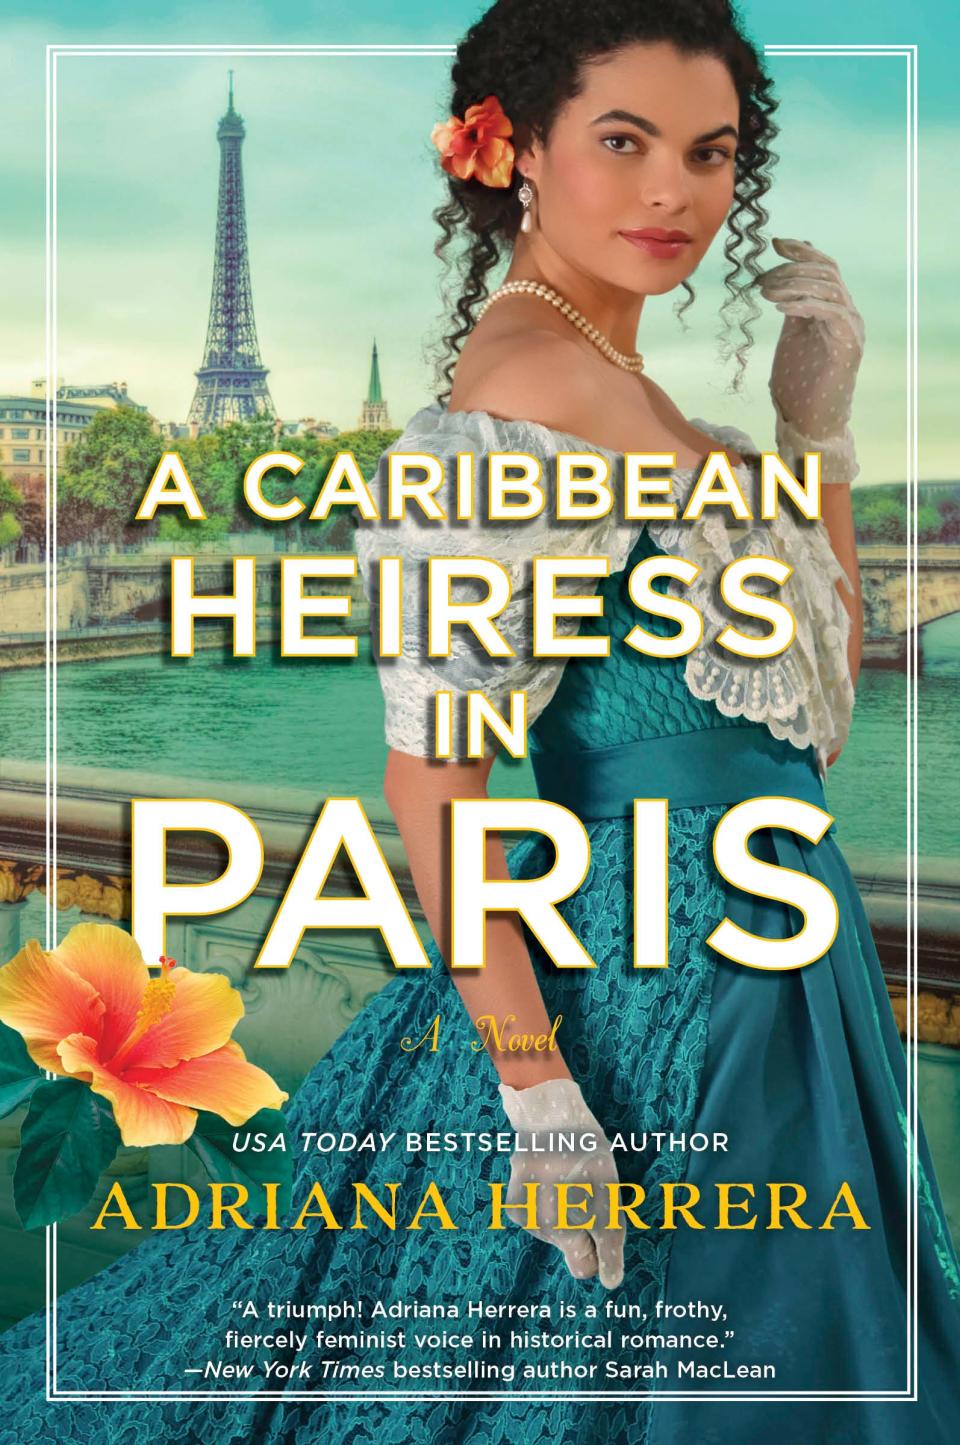 "A Caribbean Heiress in Paris," by Adriana Herrera.